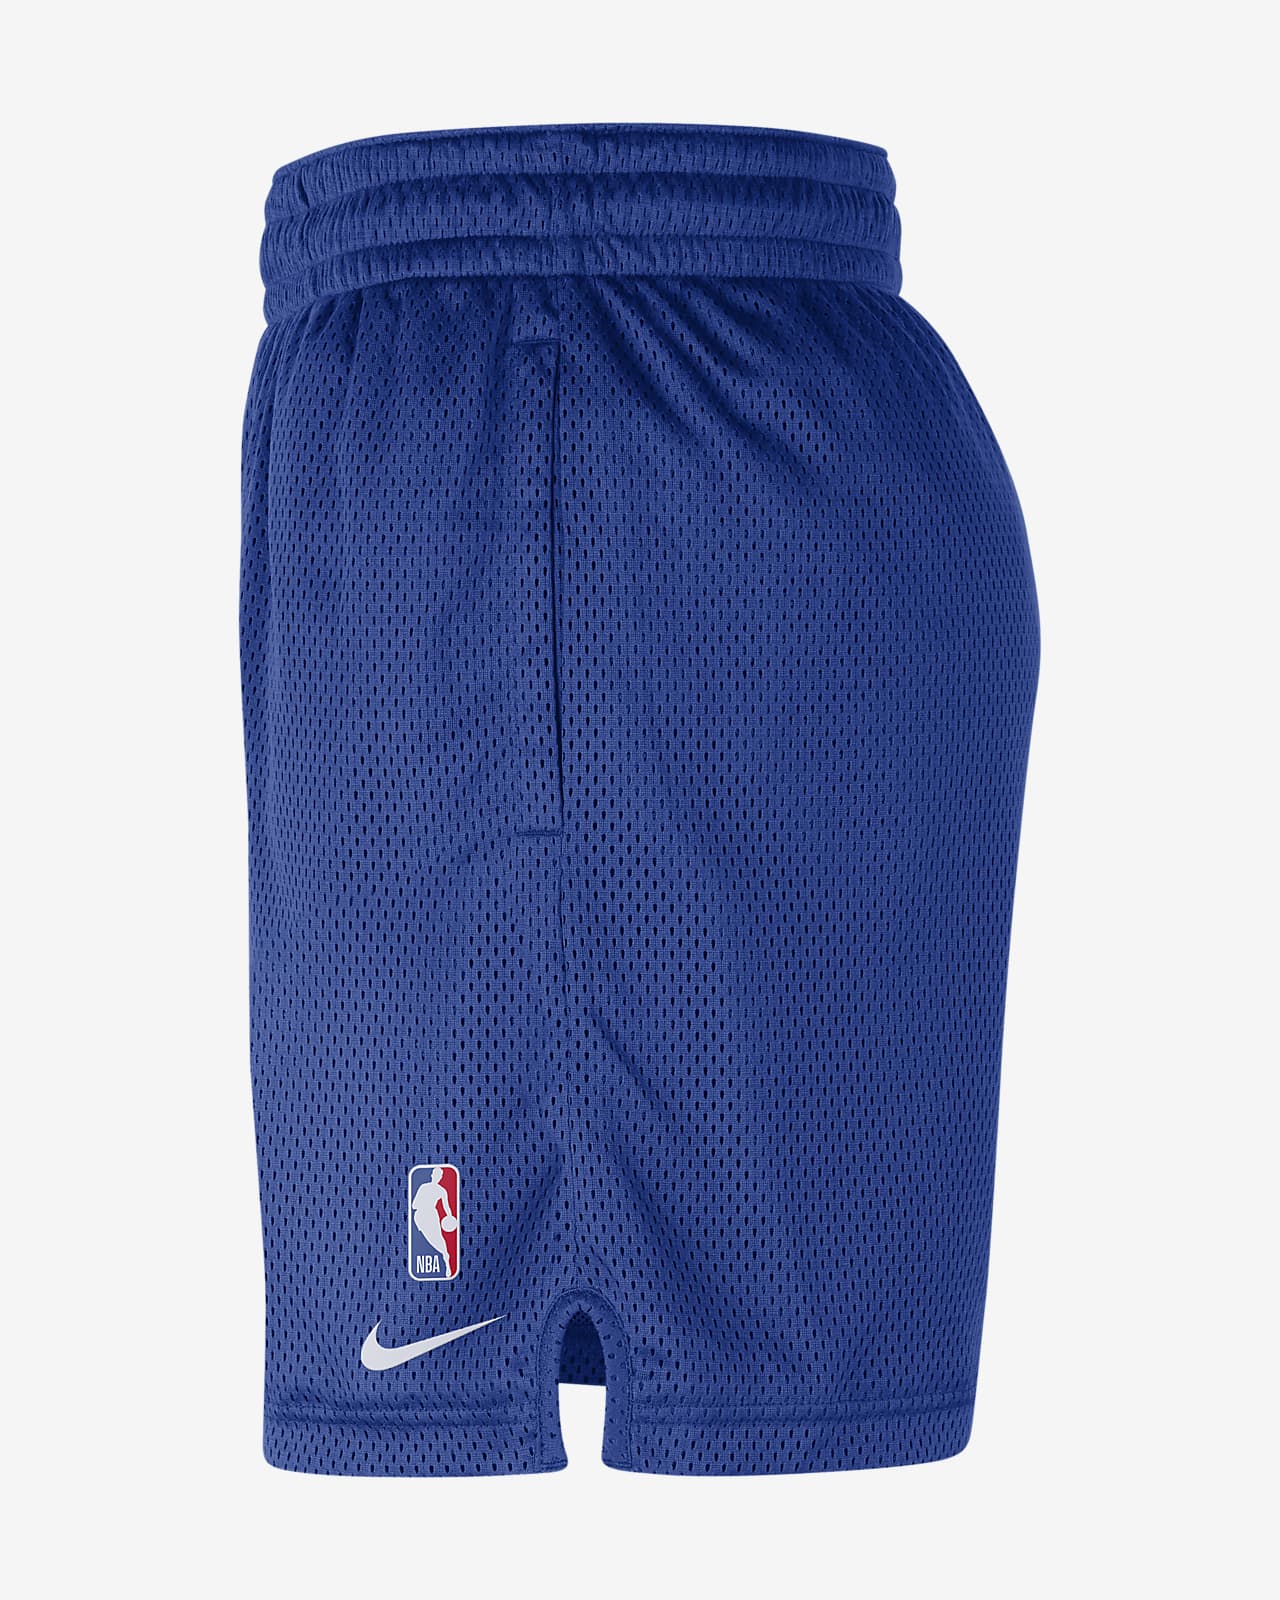 Golden State Warriors Nike Men's NBA Shorts in Blue, Size: XL | DN8238-495